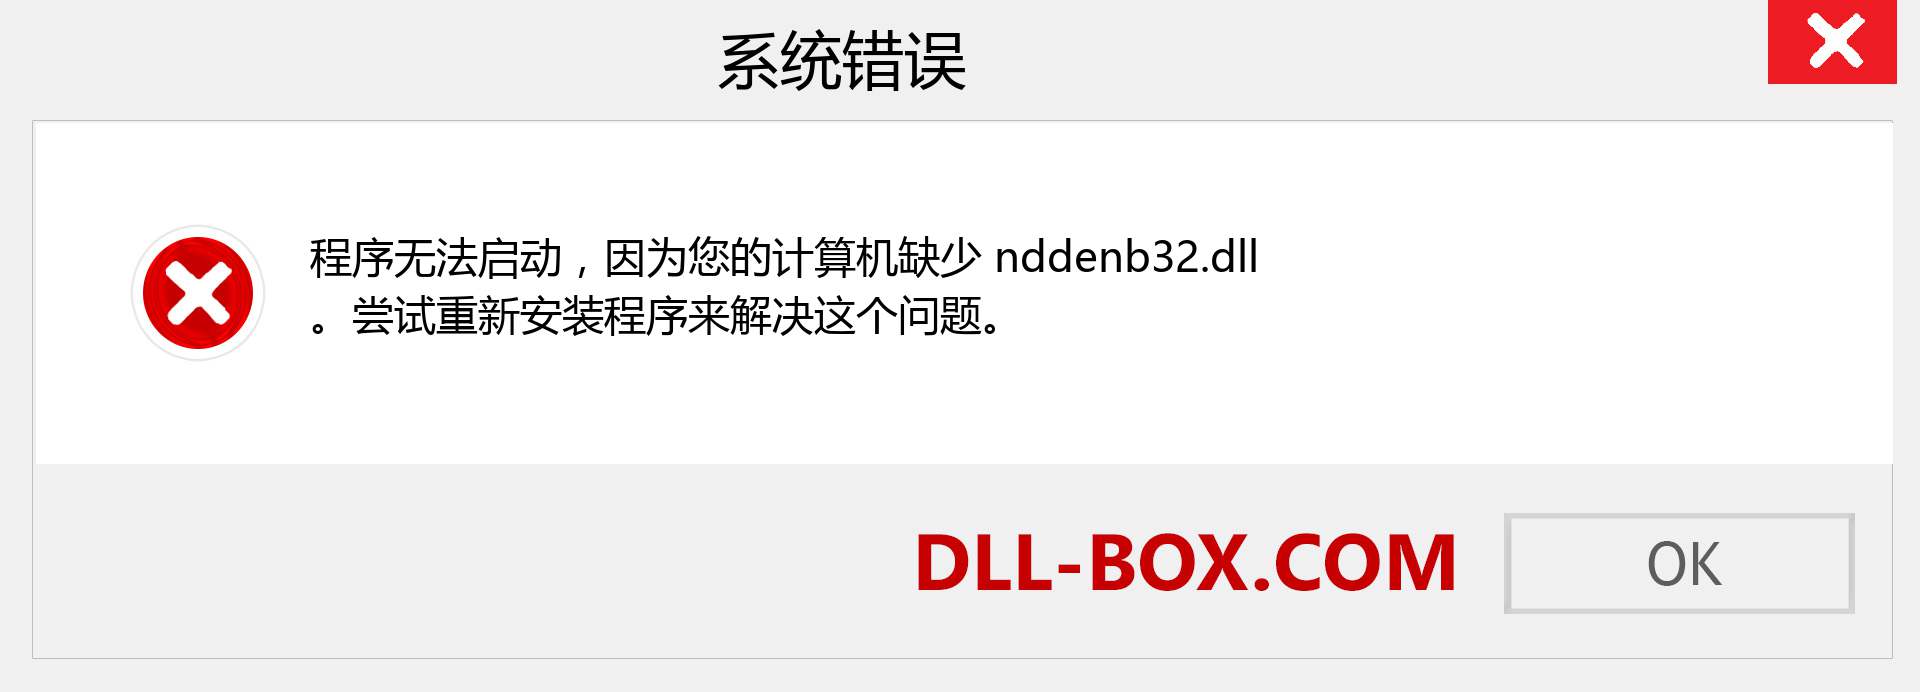 nddenb32.dll 文件丢失？。 适用于 Windows 7、8、10 的下载 - 修复 Windows、照片、图像上的 nddenb32 dll 丢失错误